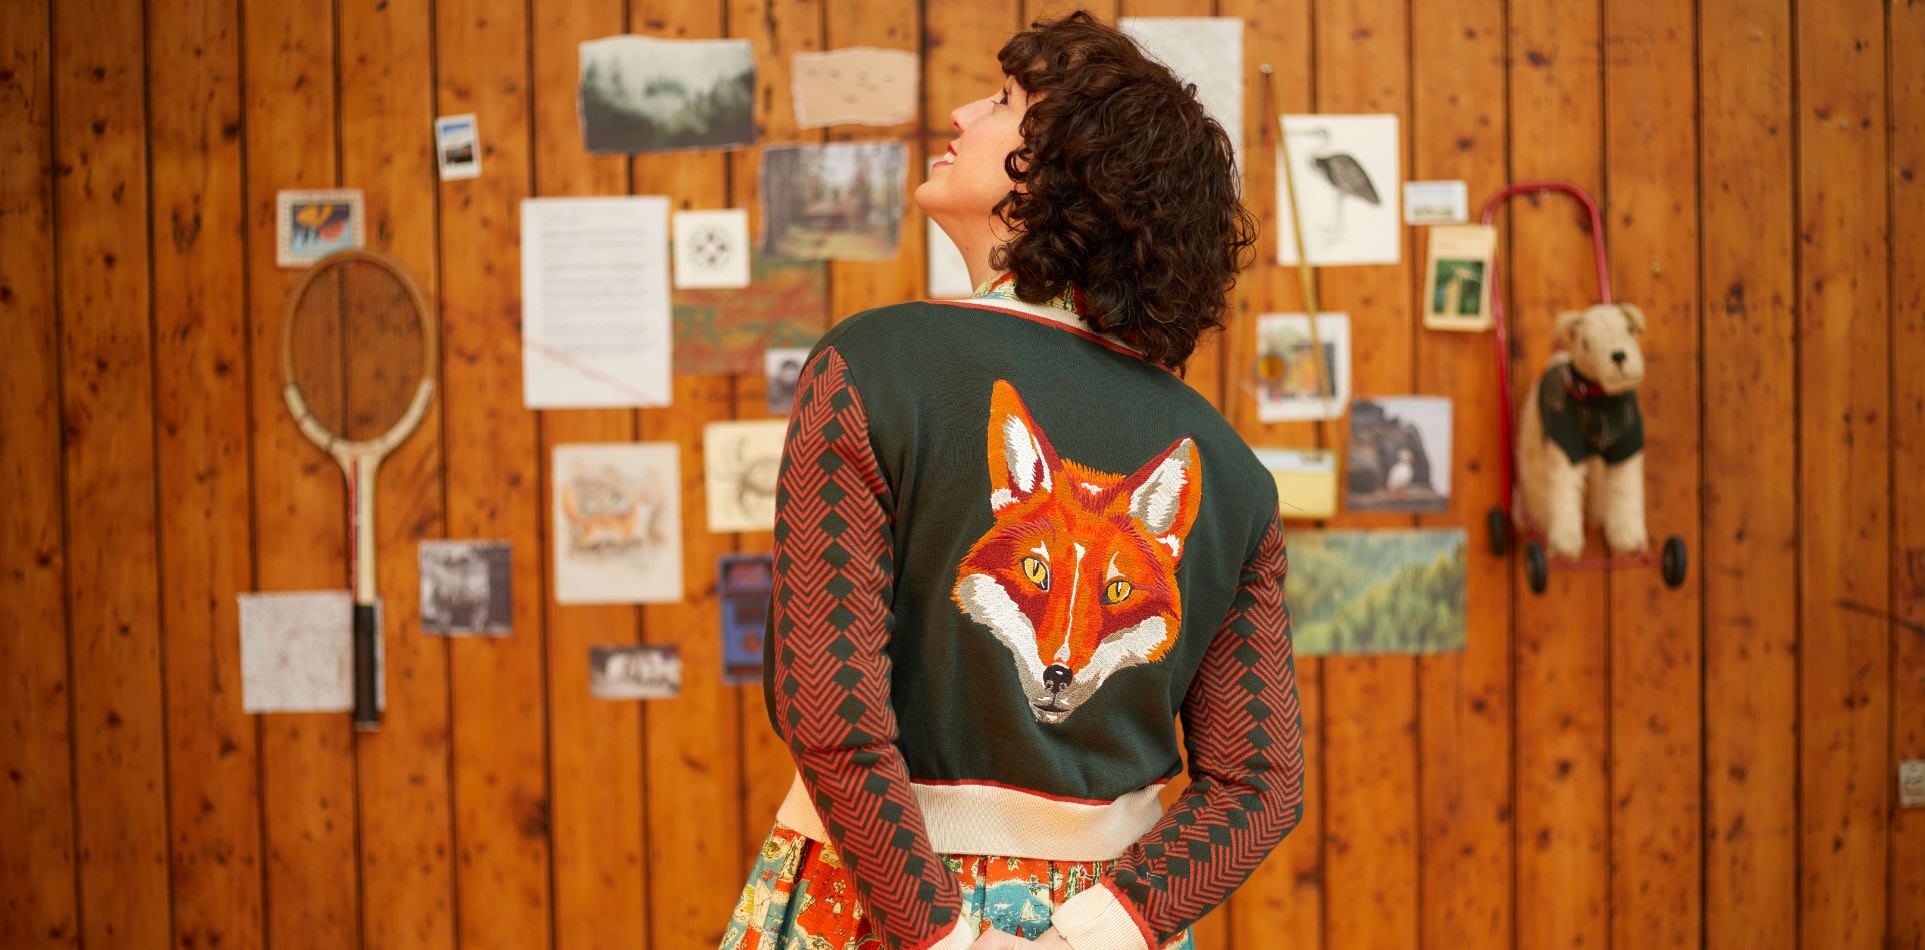 Green Fox Embroidered Vera Cardigan by Palava – Modern Millie